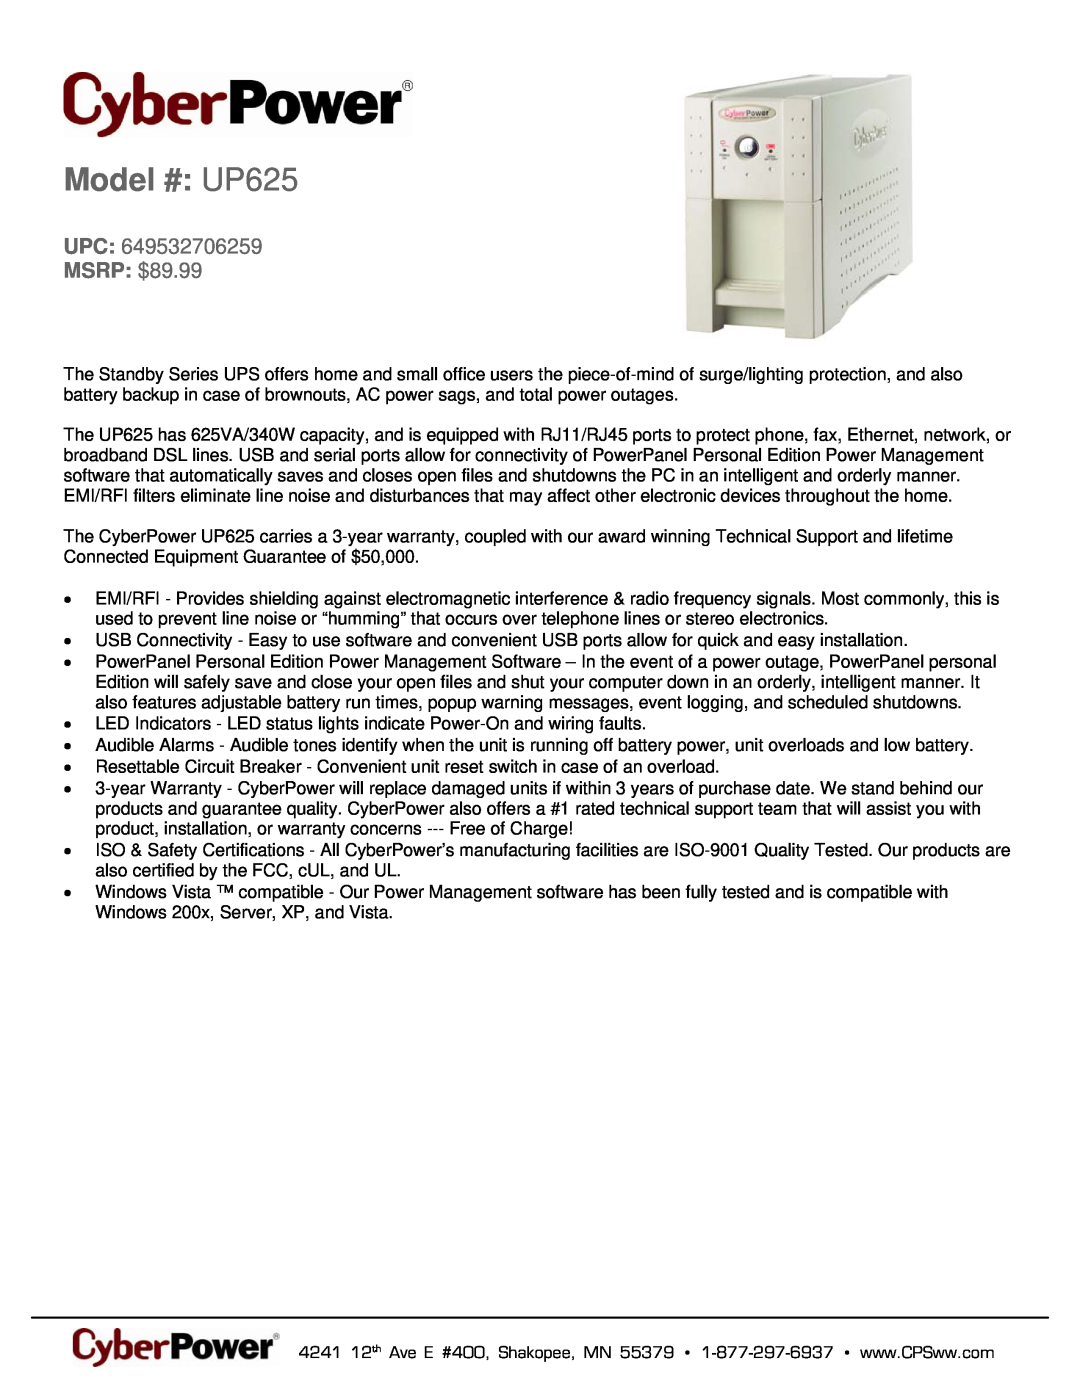 CyberPower Systems 649532706259 warranty Model # UP625, MSRP $89.99 